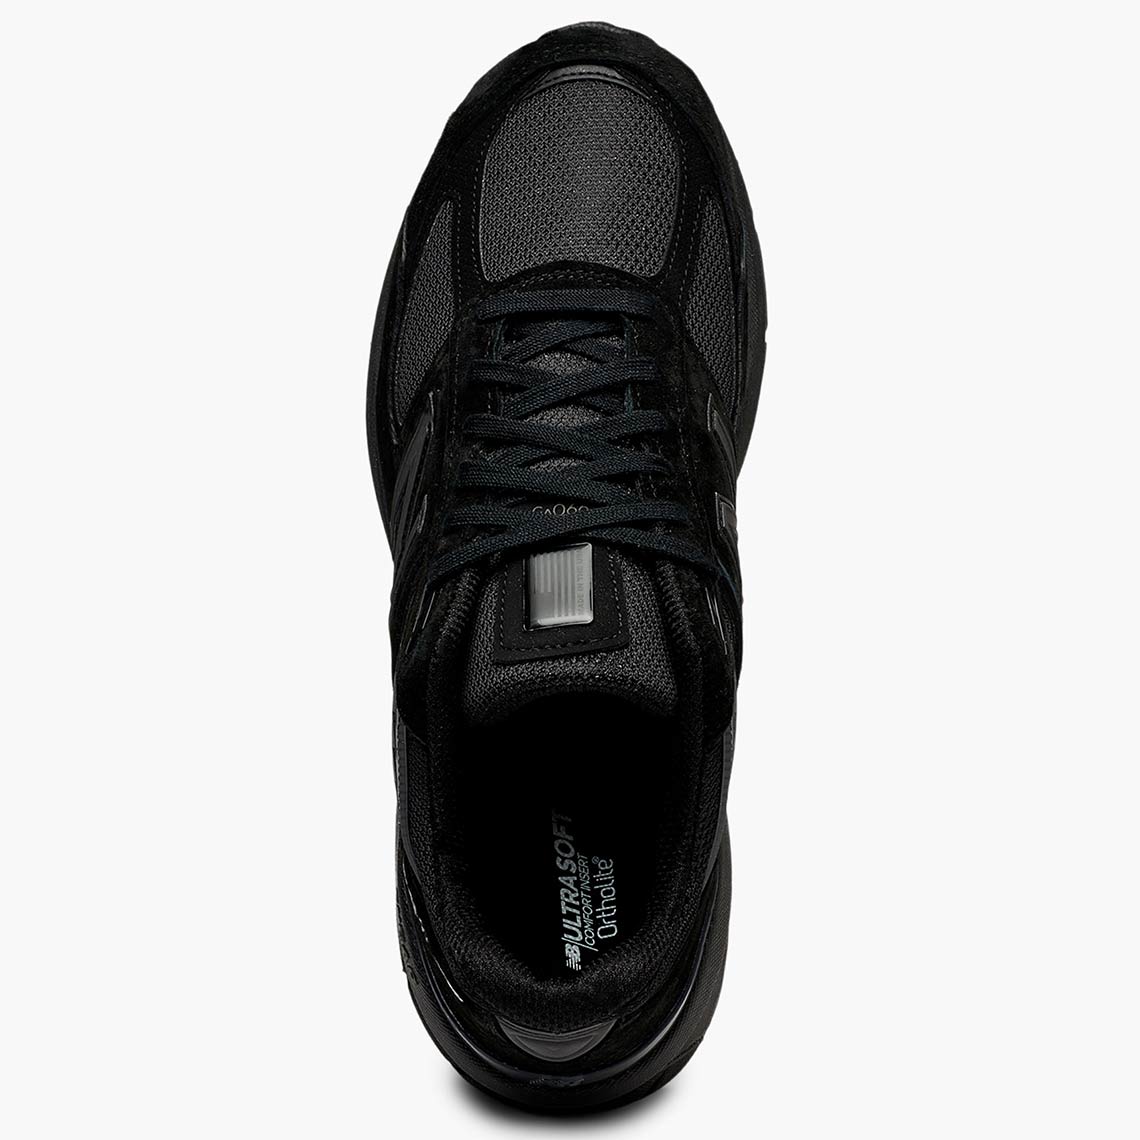 New Balance 990v5 Black Black 3